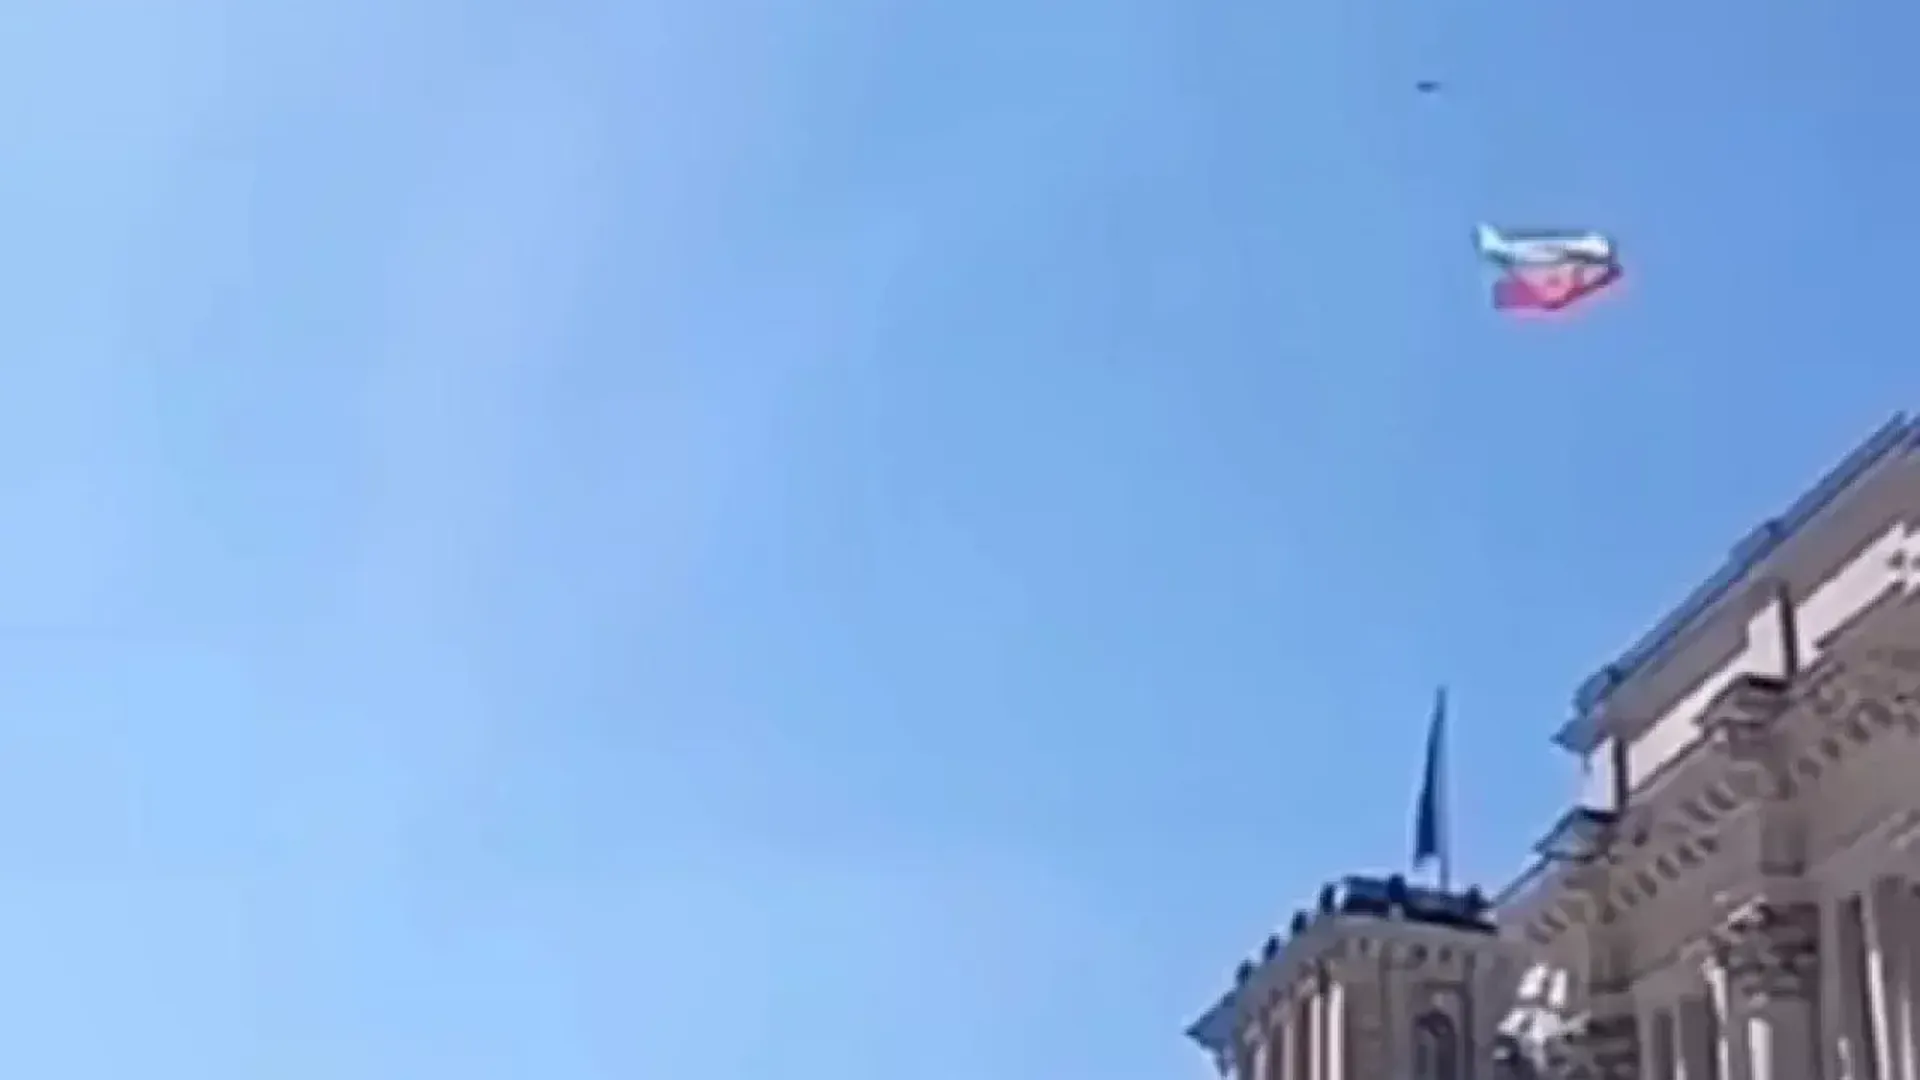 Мужчина запустил над Рейхстагом дрон с прикрепленным российским флагом